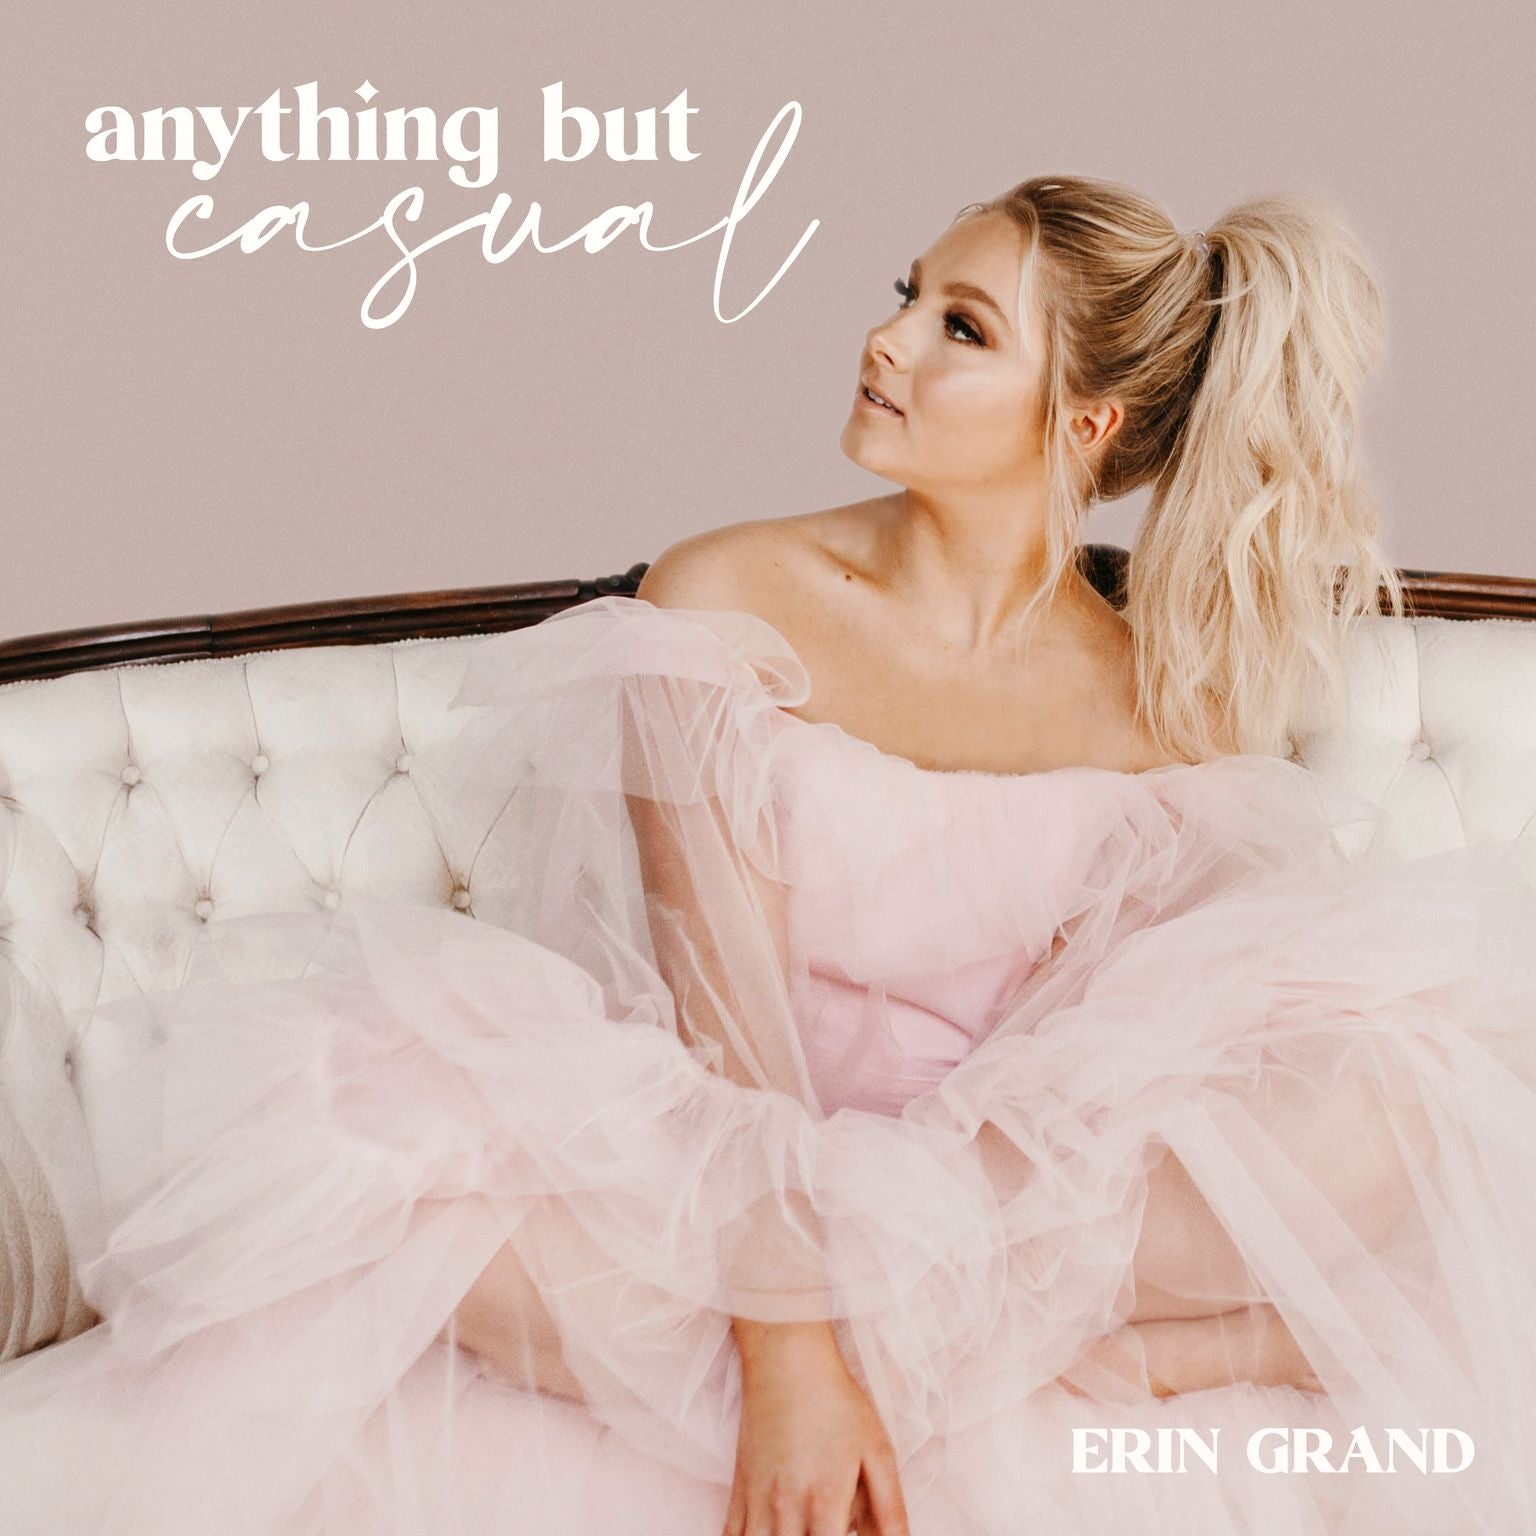 Erin Grand's Album Release Show Ticket